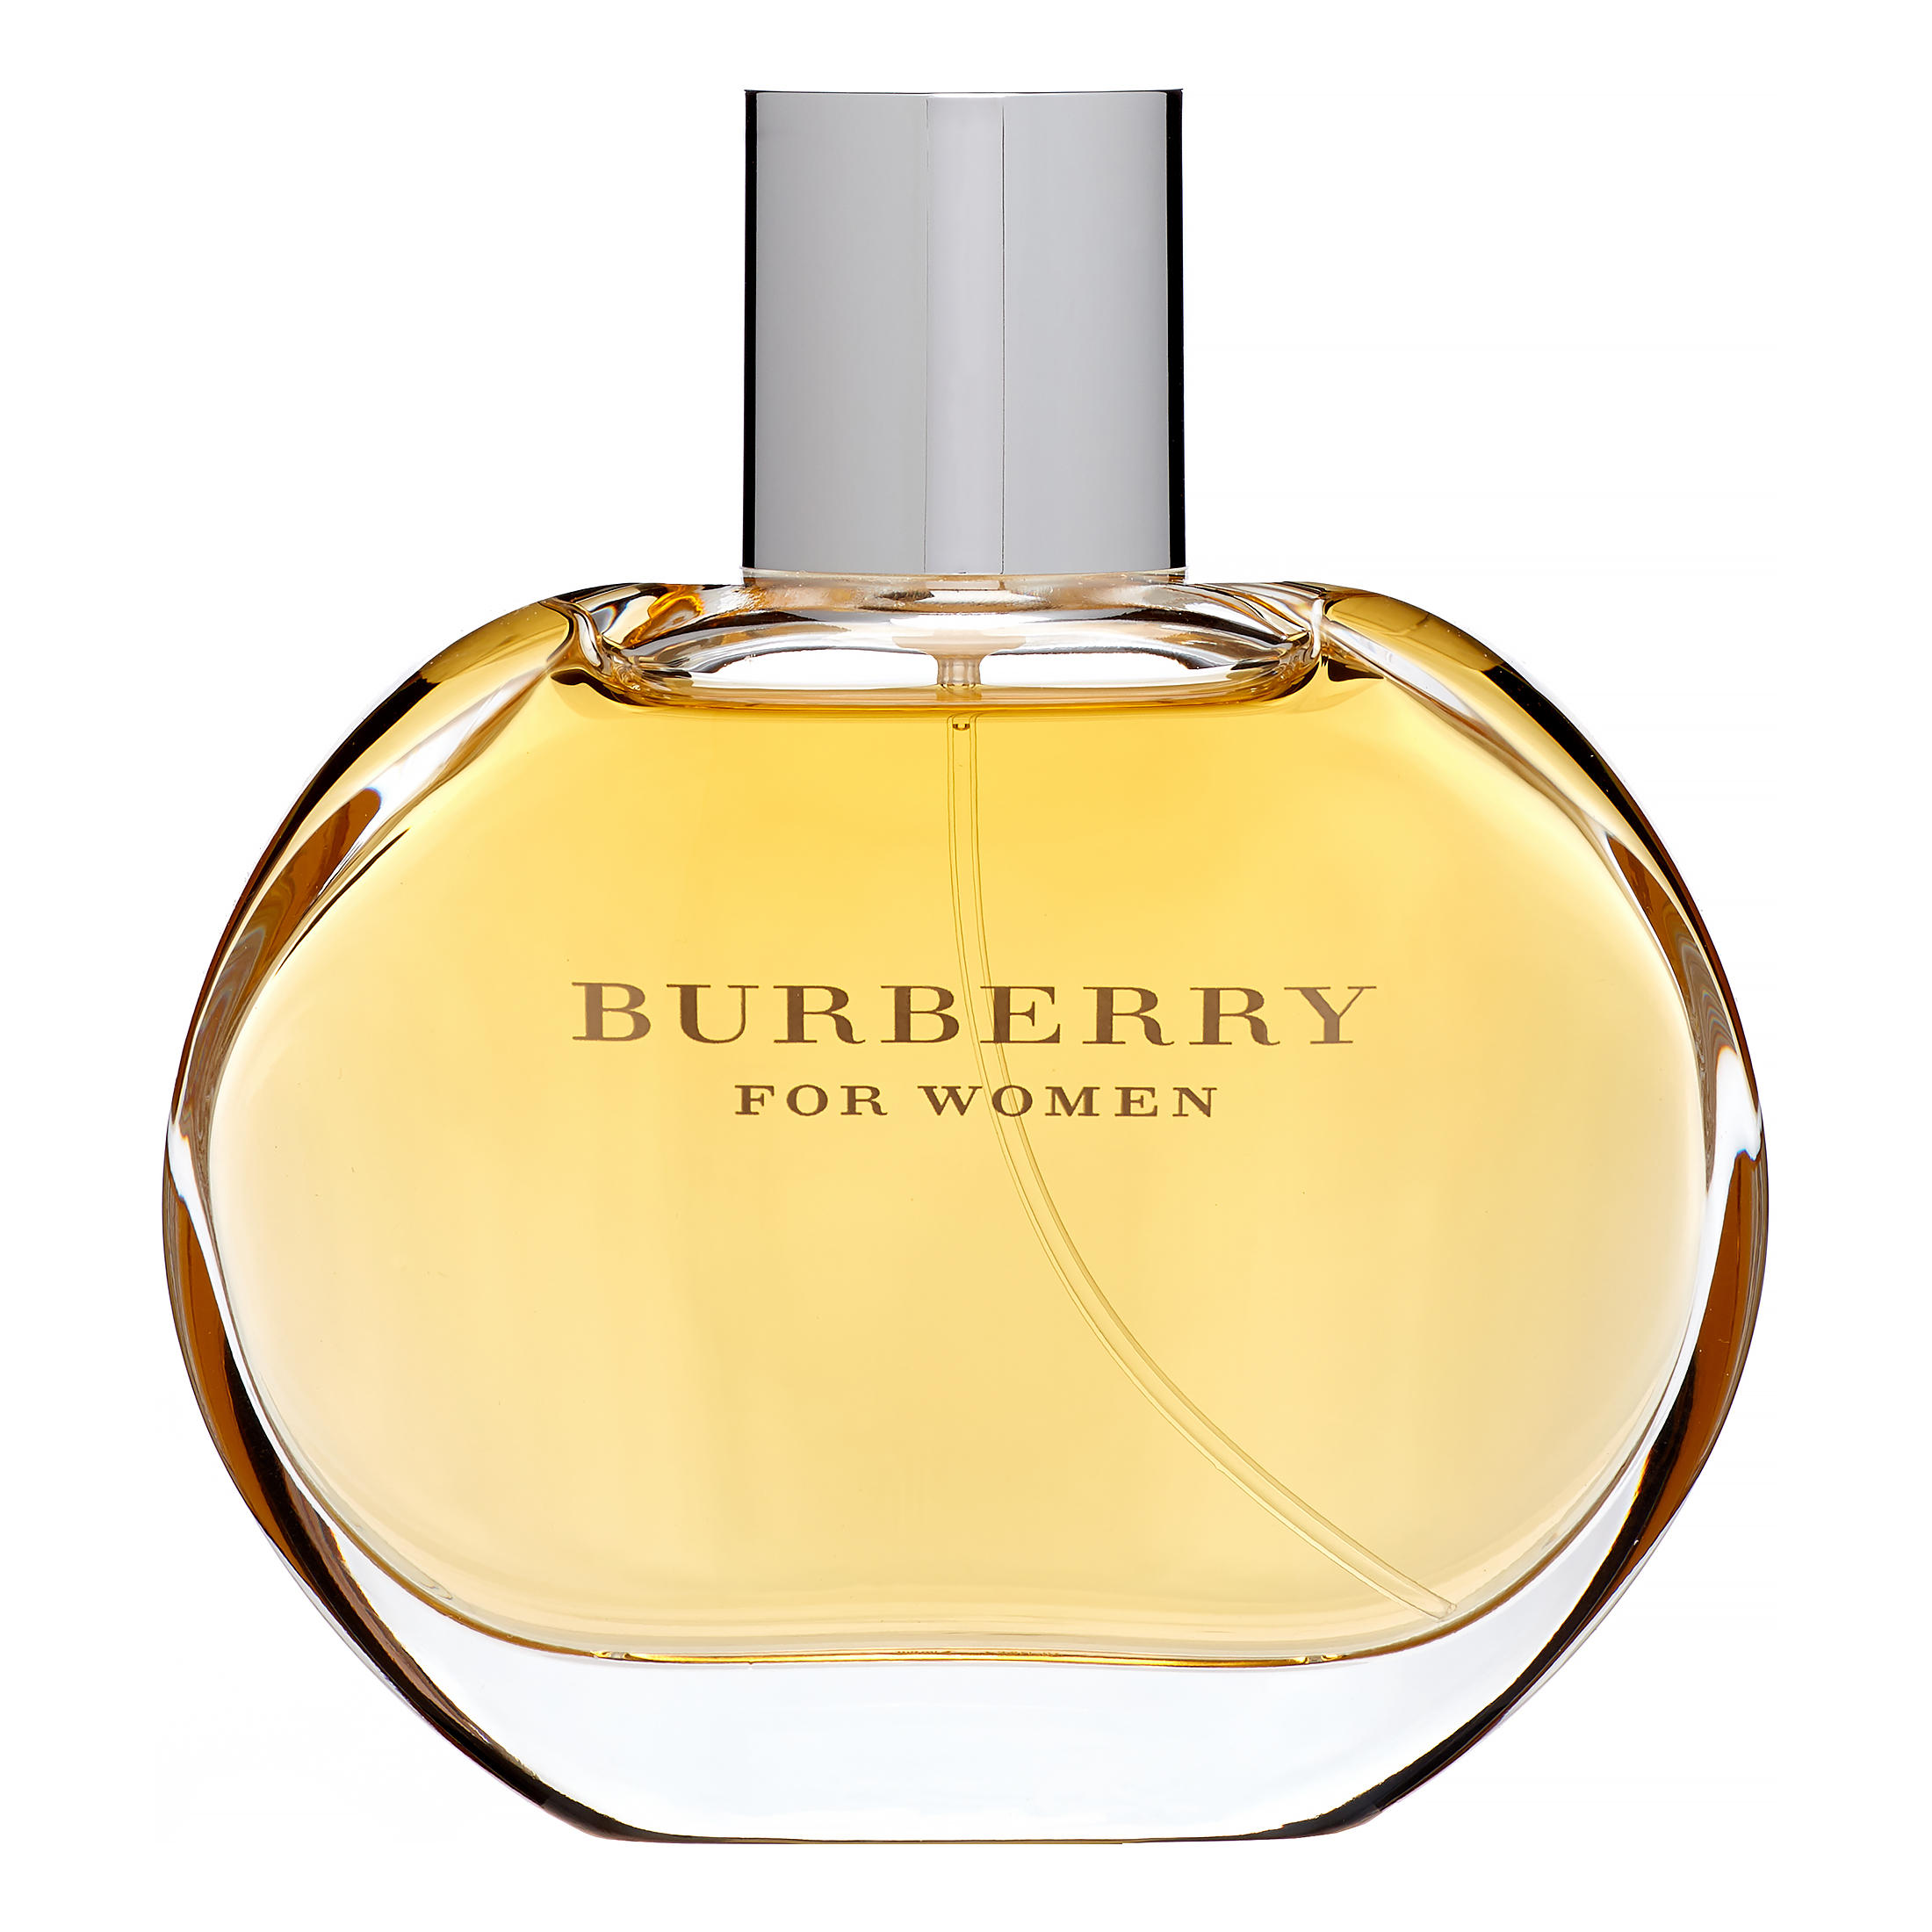 Introducir 84+ imagen burberry perfume original